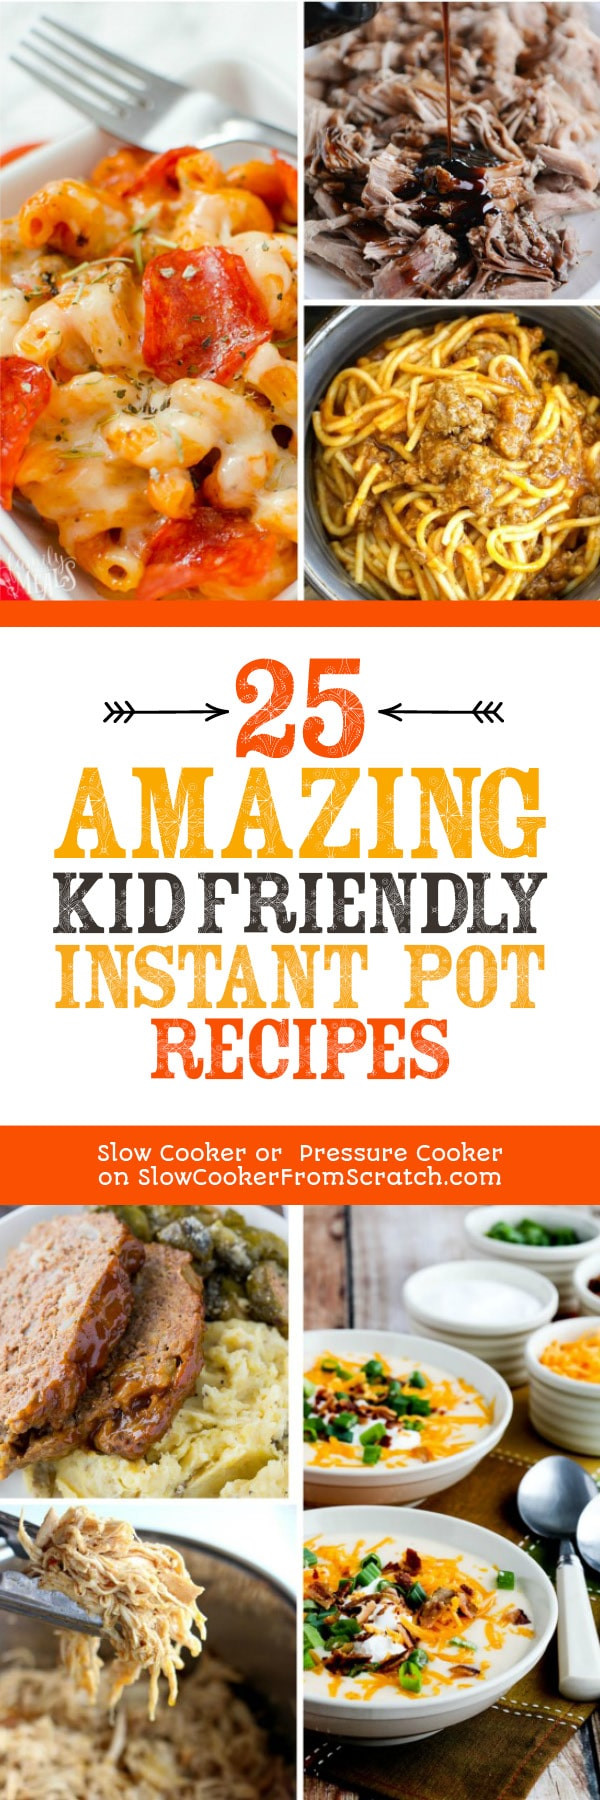 Instant Pot Recipes Kid Friendly
 25 Amazing Kid Friendly Instant Pot Recipes Slow Cooker